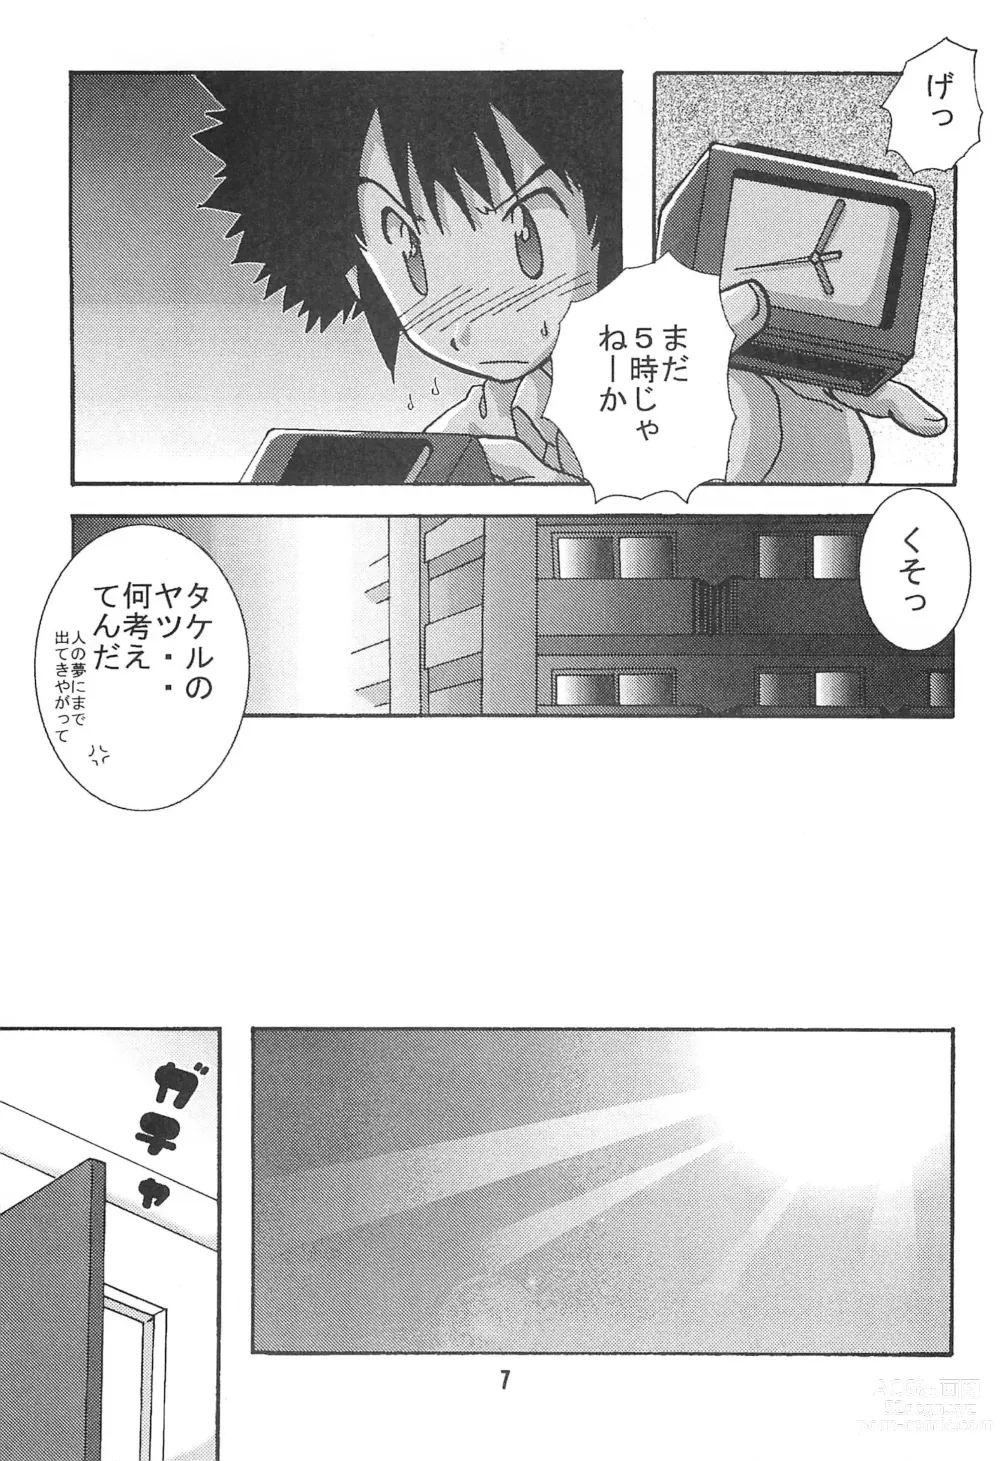 Page 7 of doujinshi SUBTLE RELATION